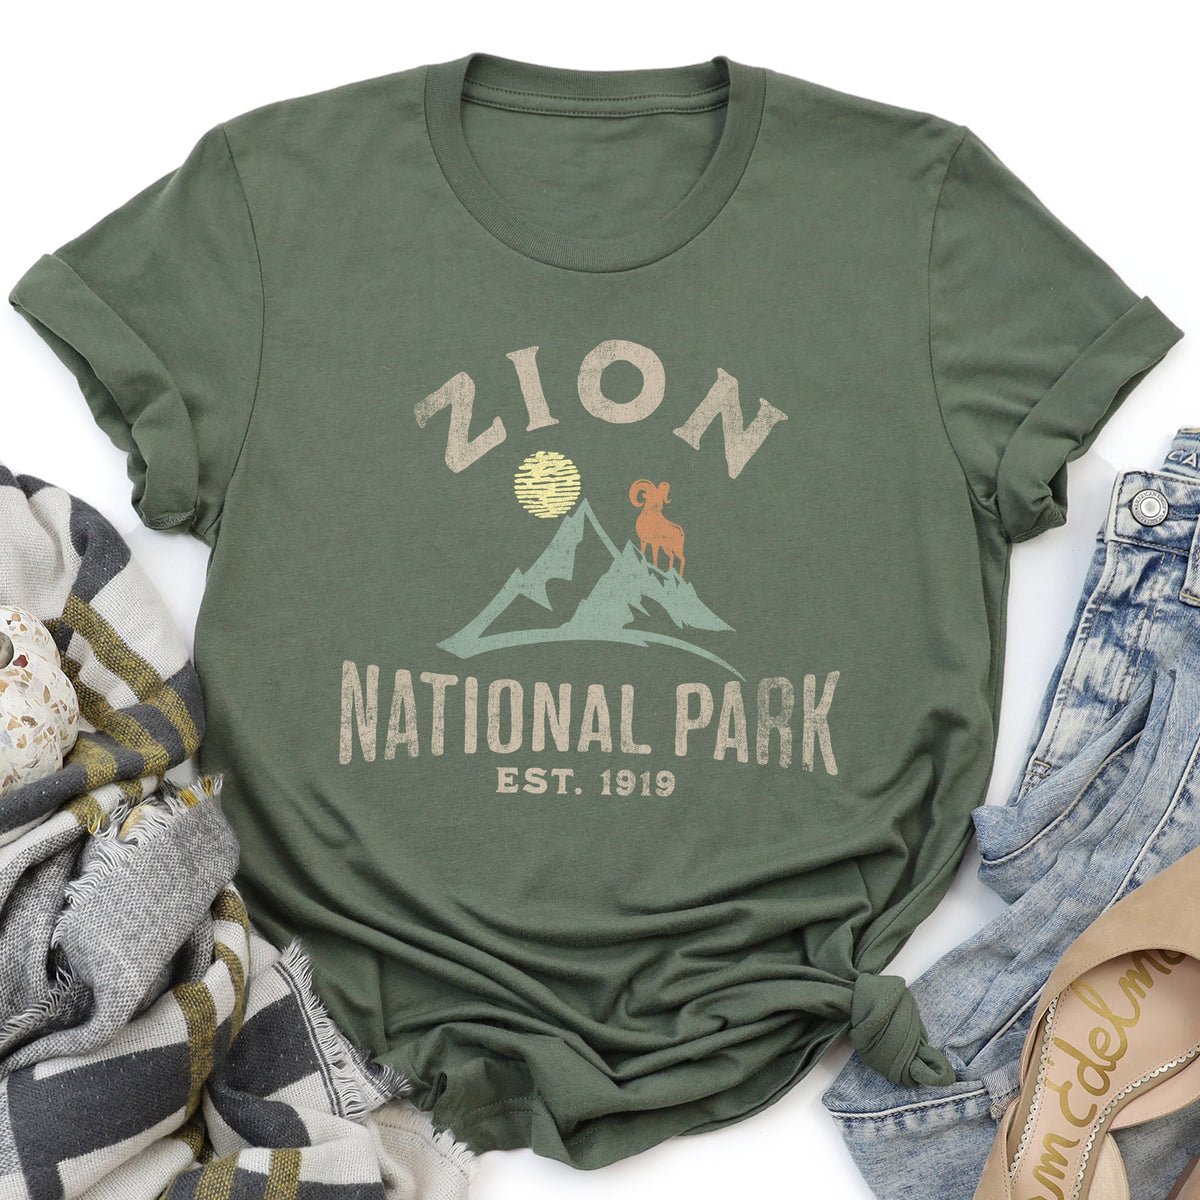 Zion National Park Super Soft Tshirt